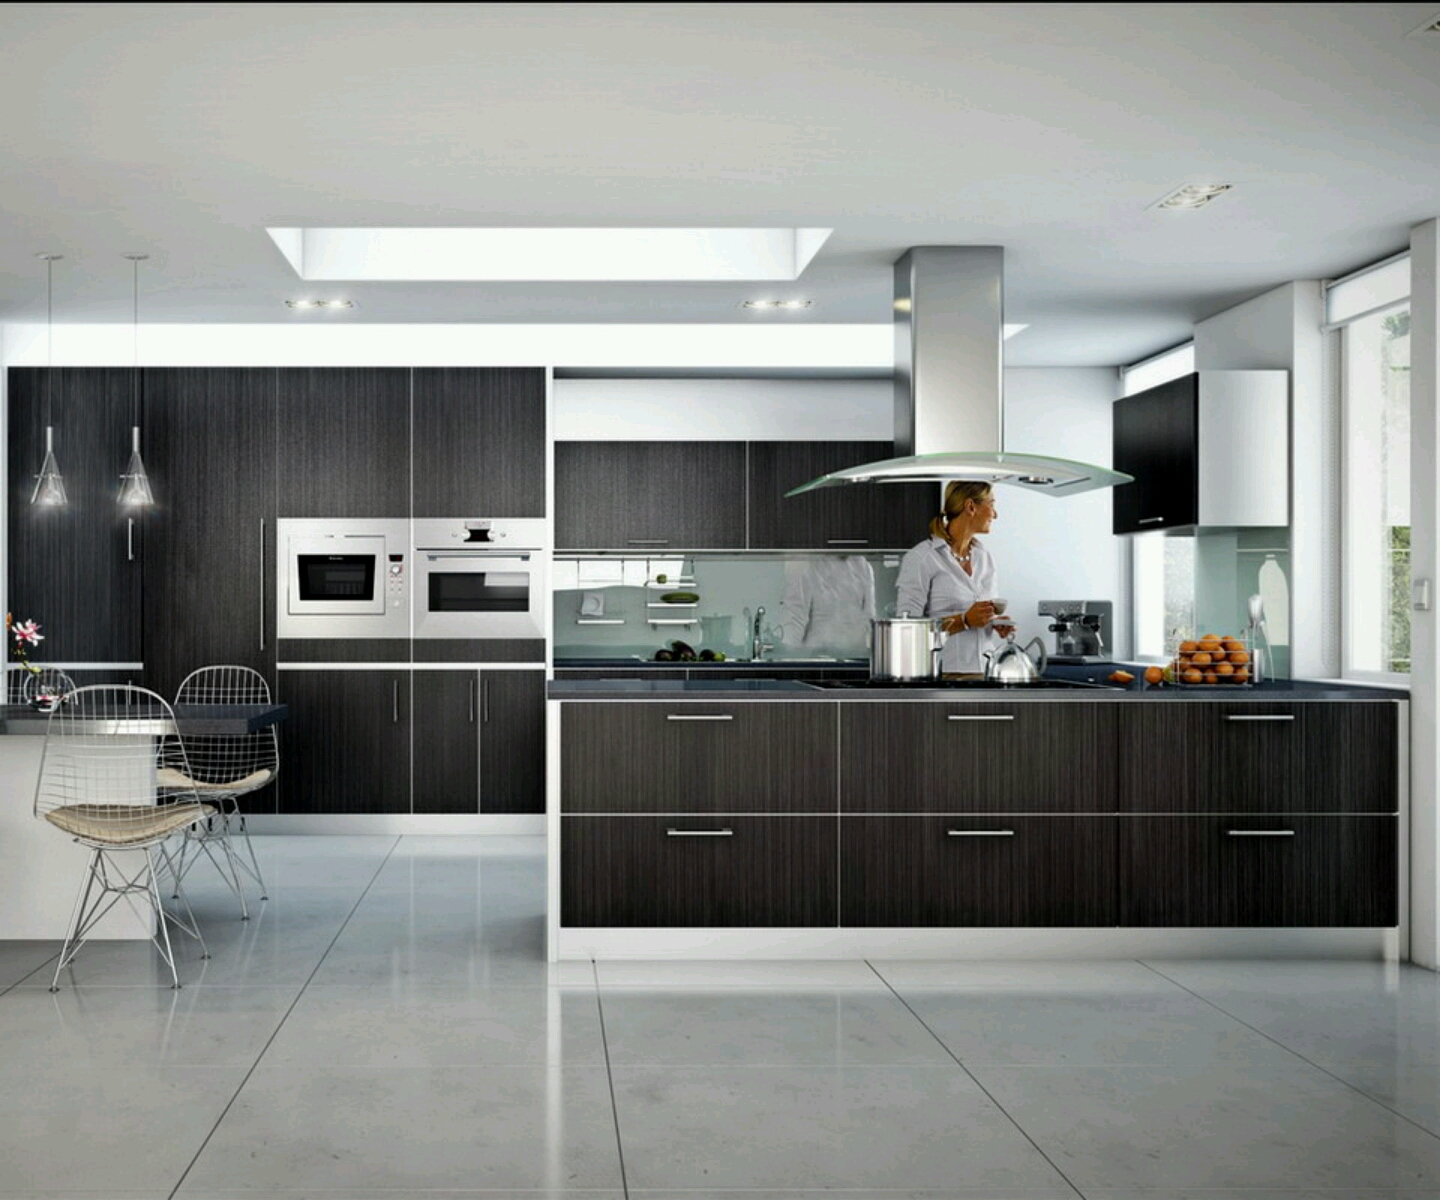 30 Modern Kitchen Design Ideas The WoW Style